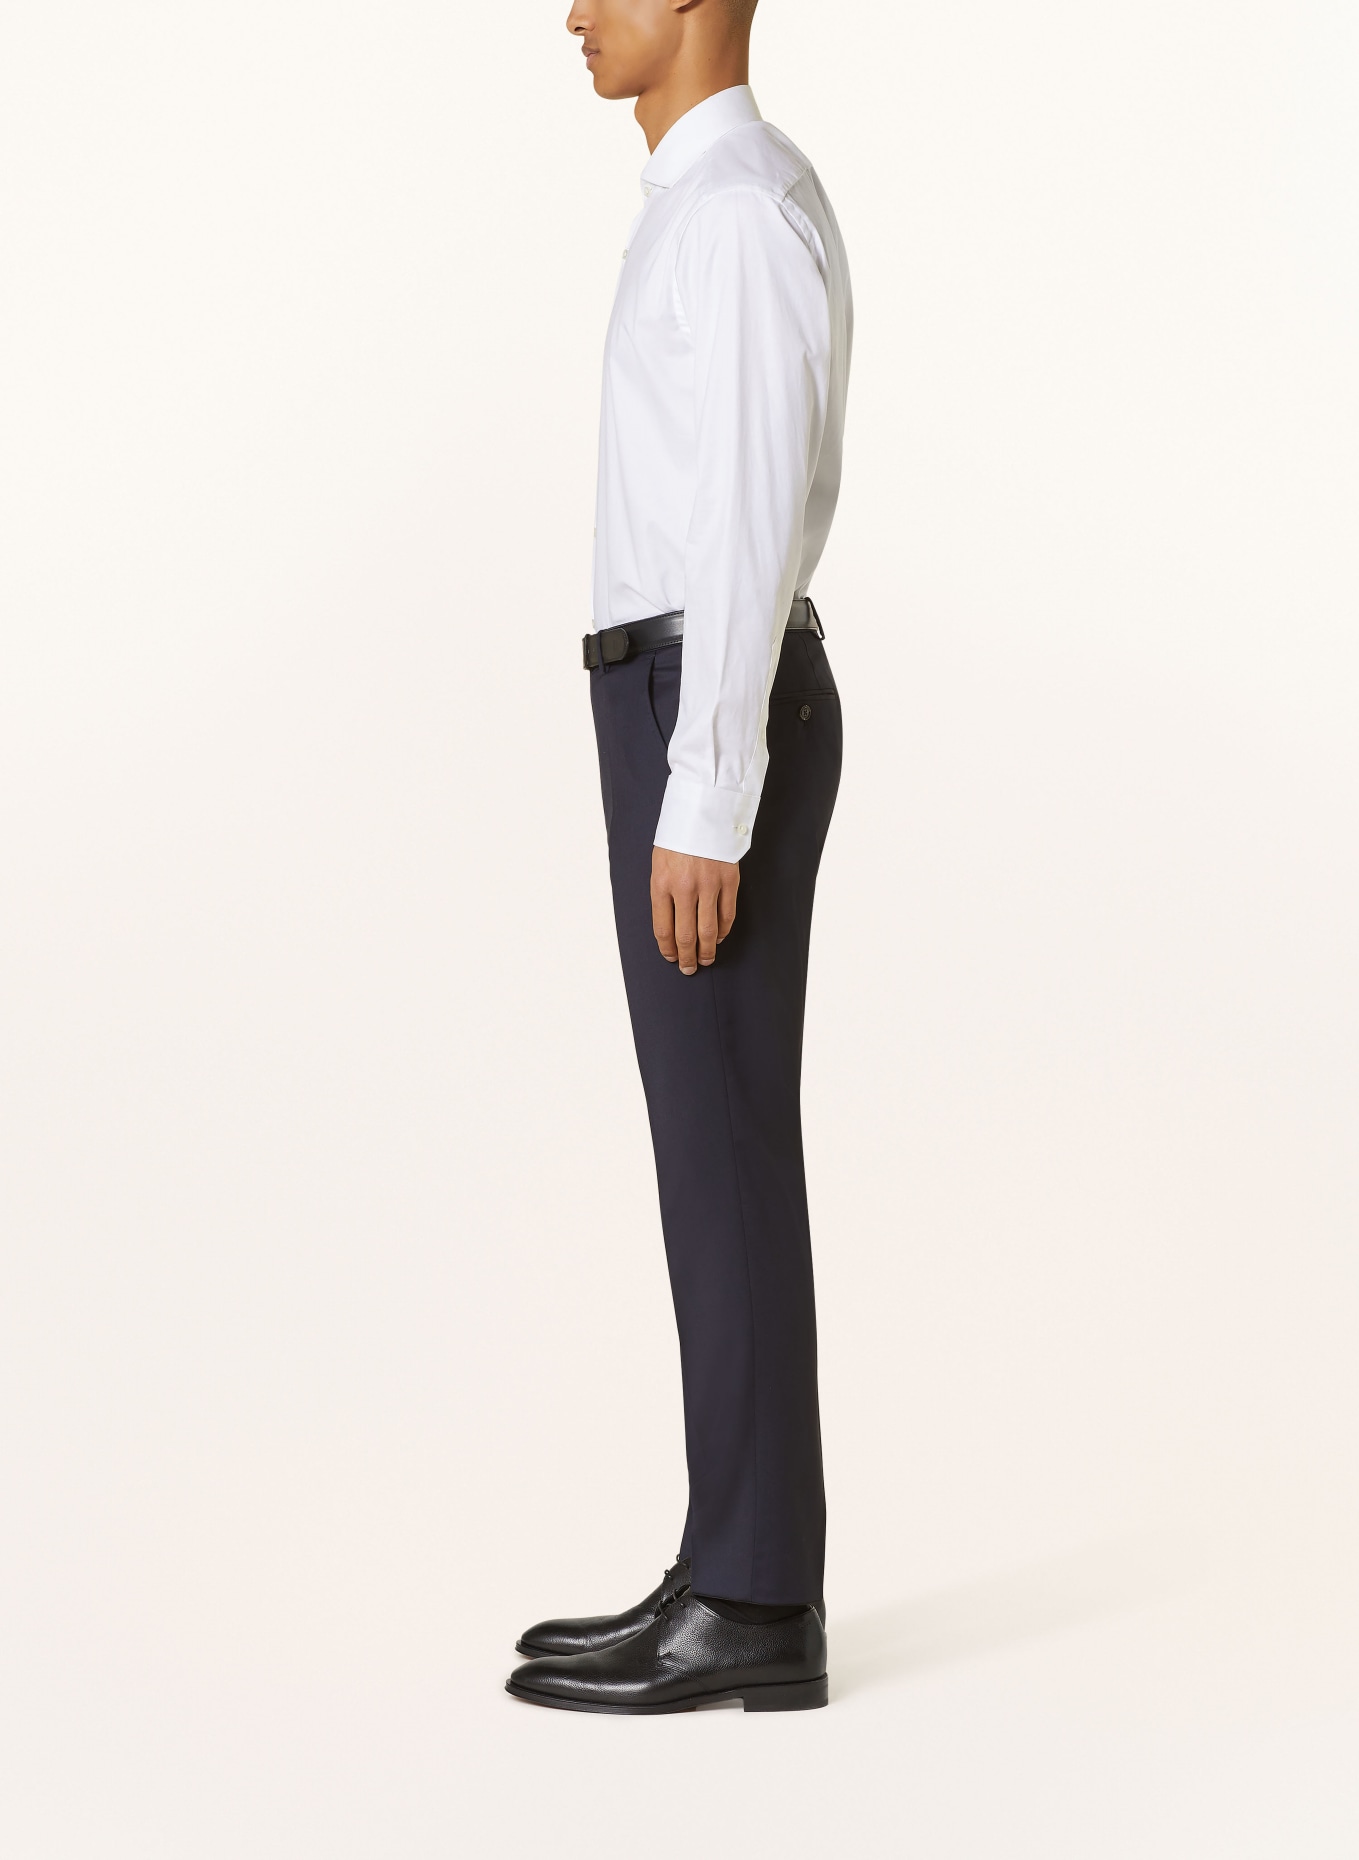 JOOP! Anzughose Slim Fit, Farbe: 401 Dark Blue                  401 (Bild 5)